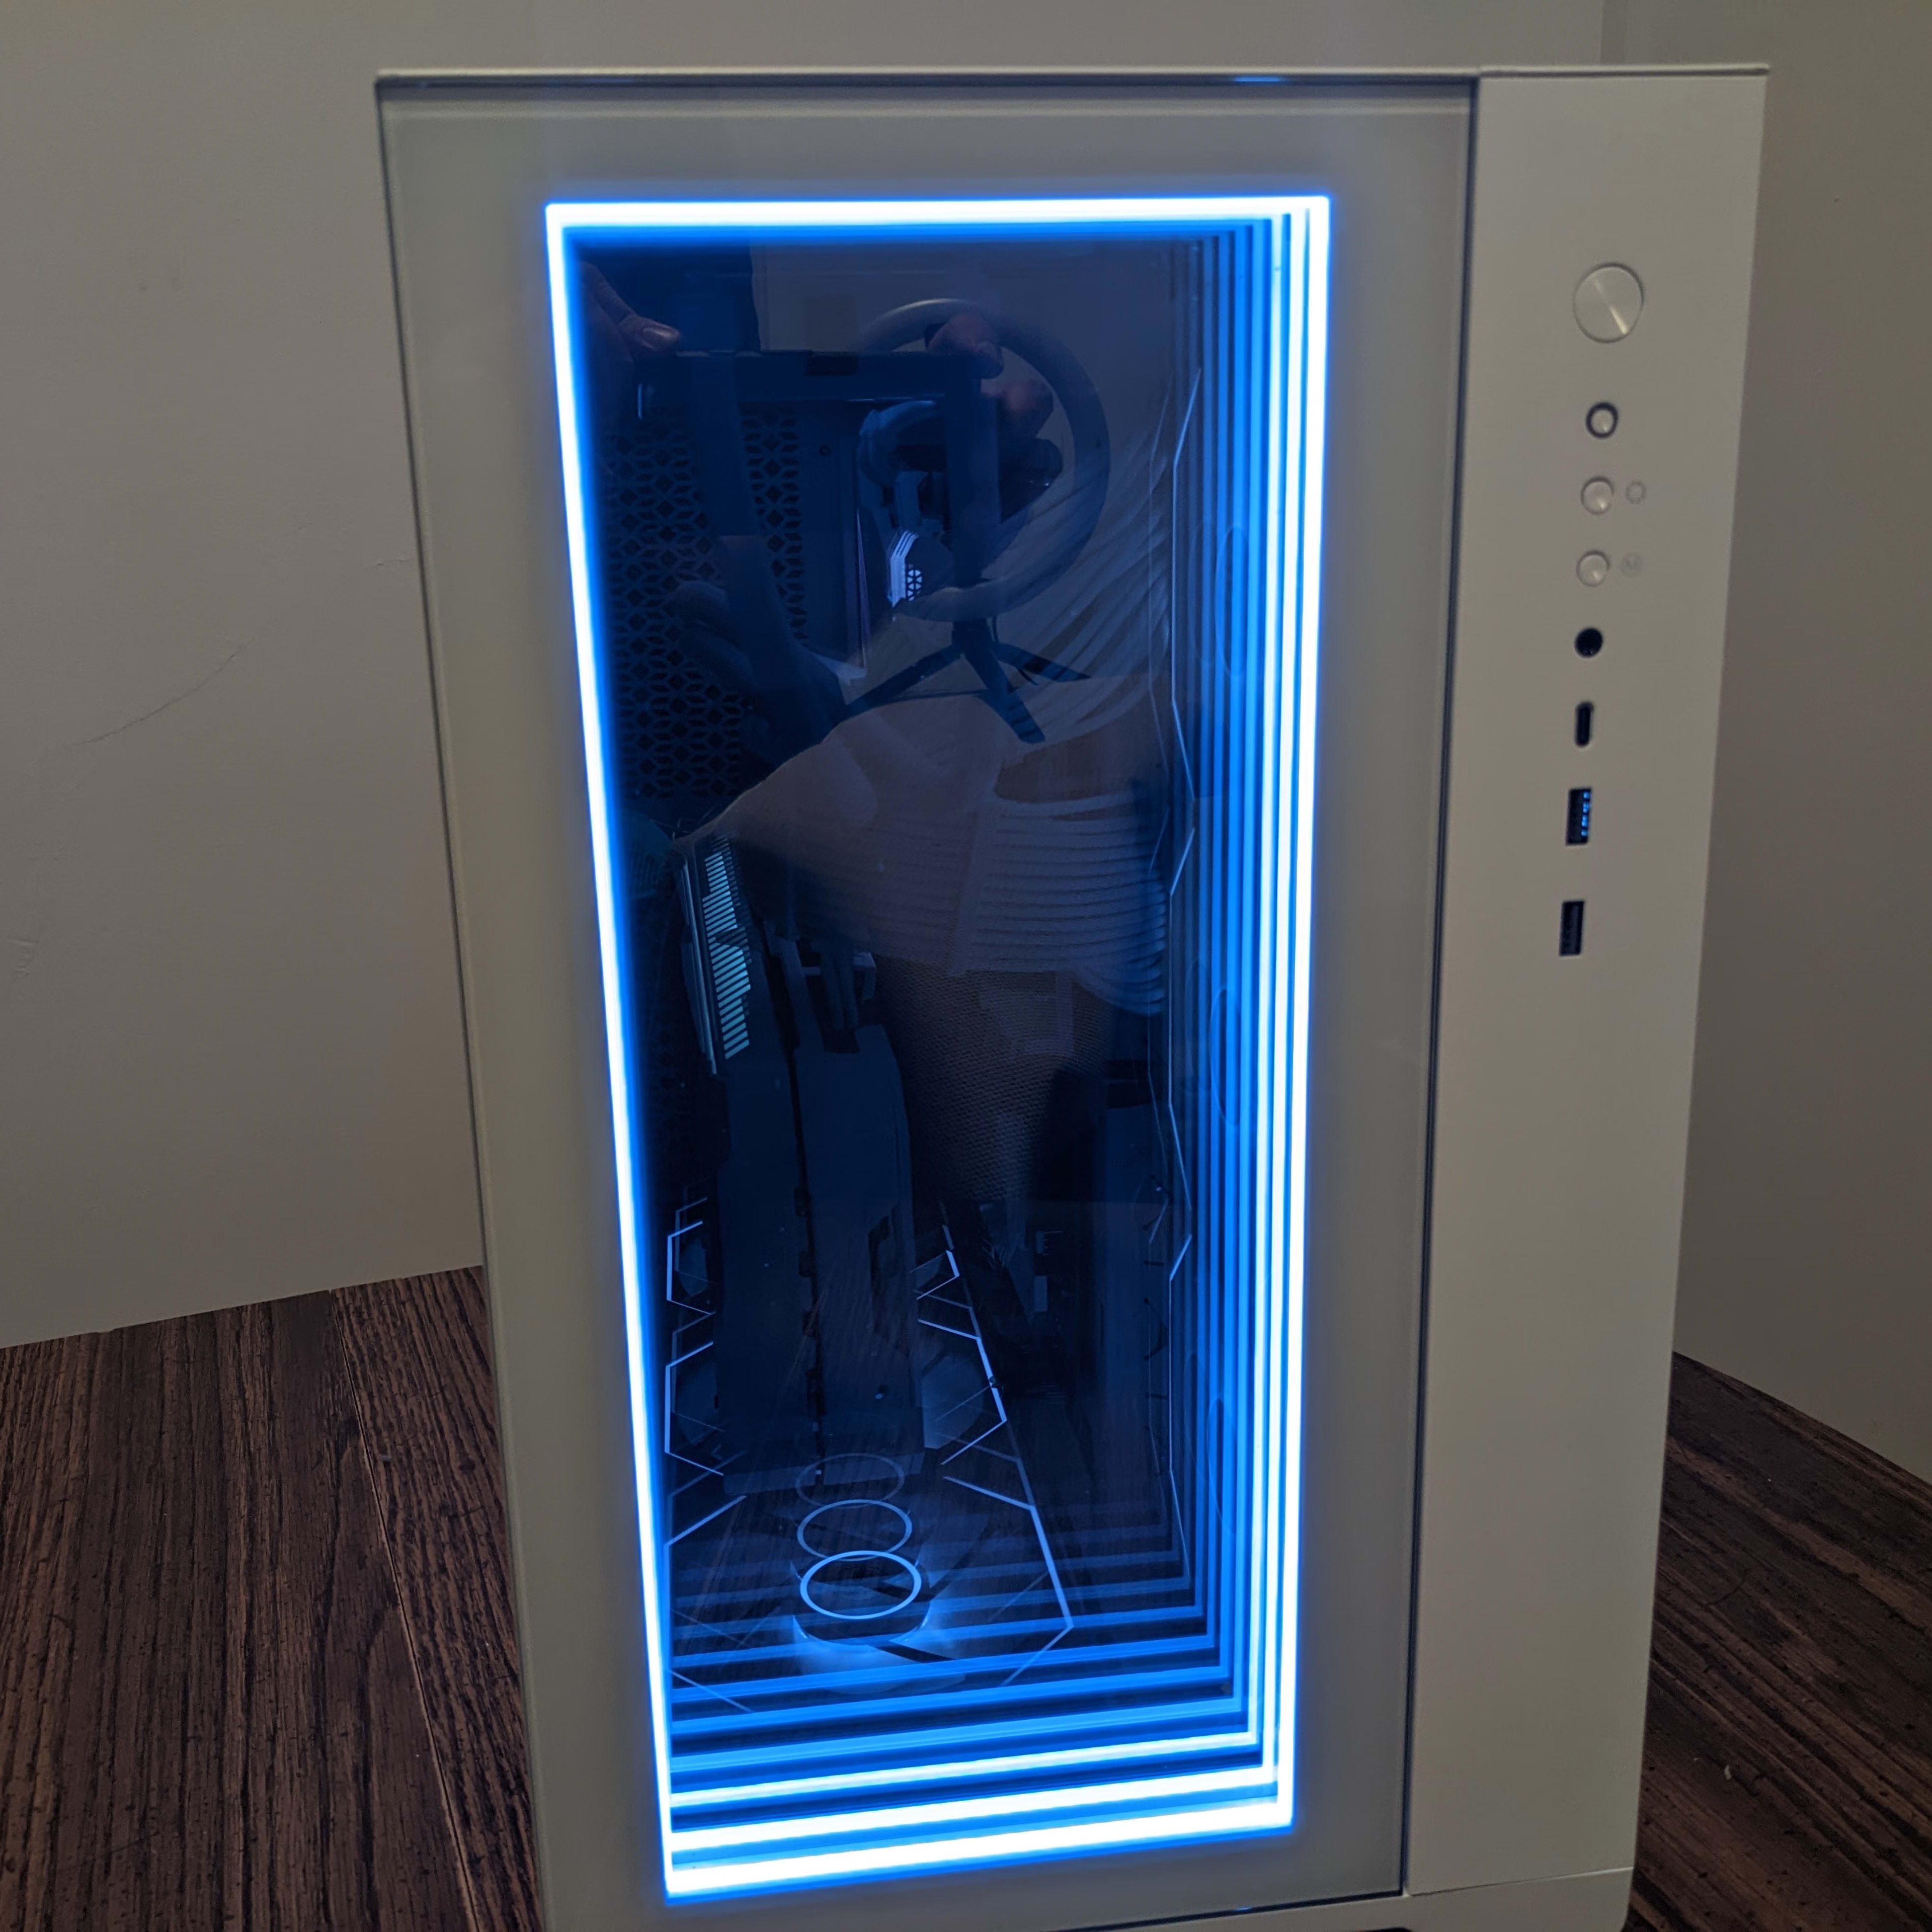 All-White Infinity Mirror Showcase New Gaming PC